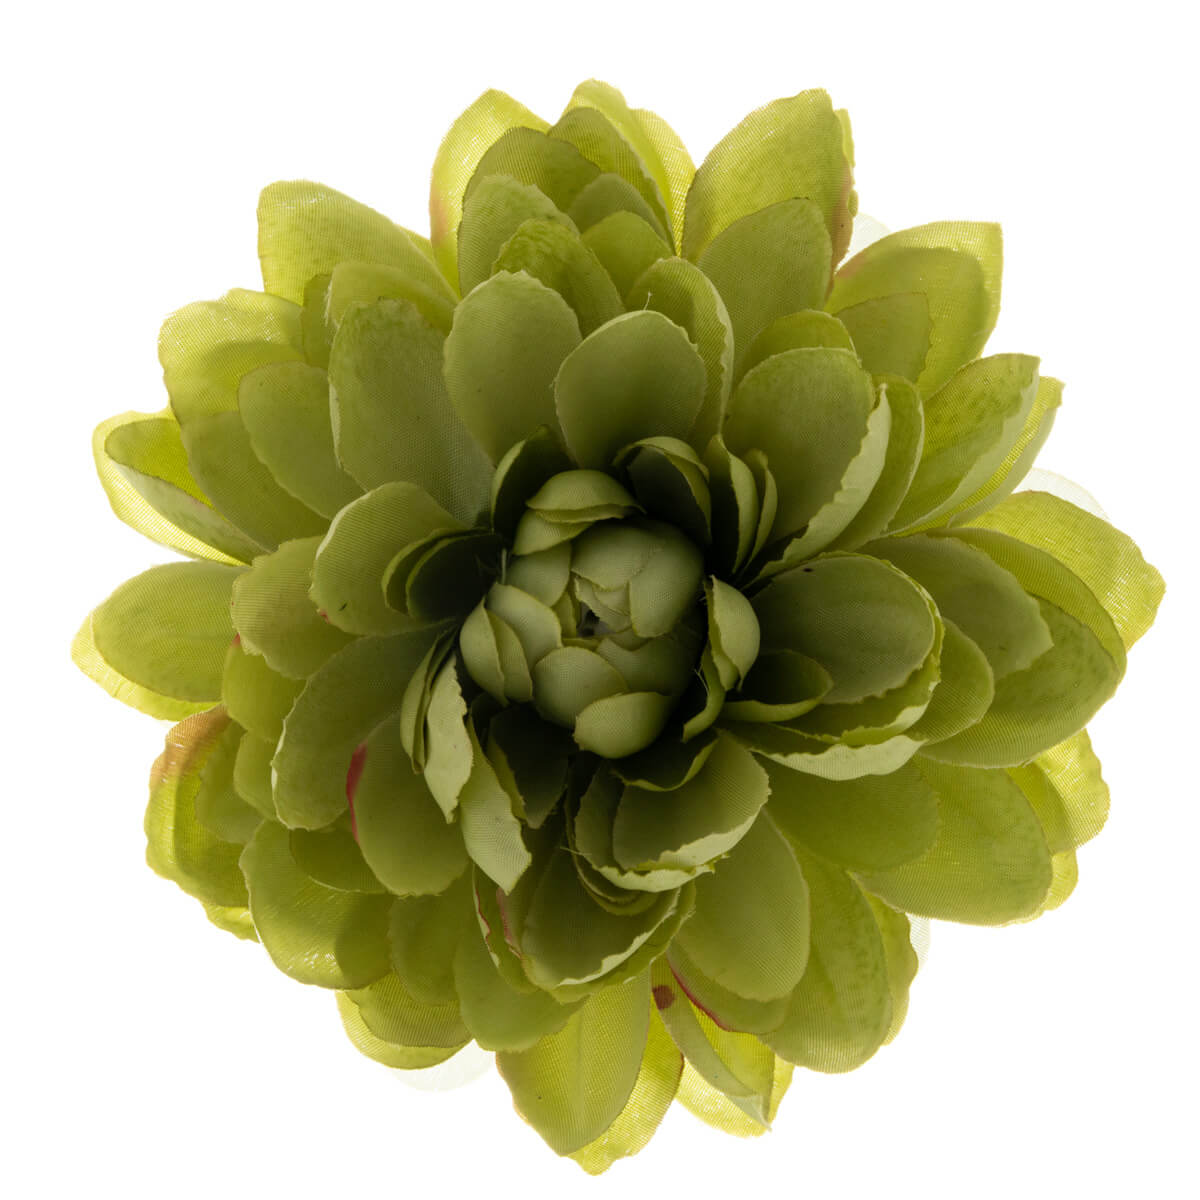 Spectacular flower for hair / accessory flower 11,5cm